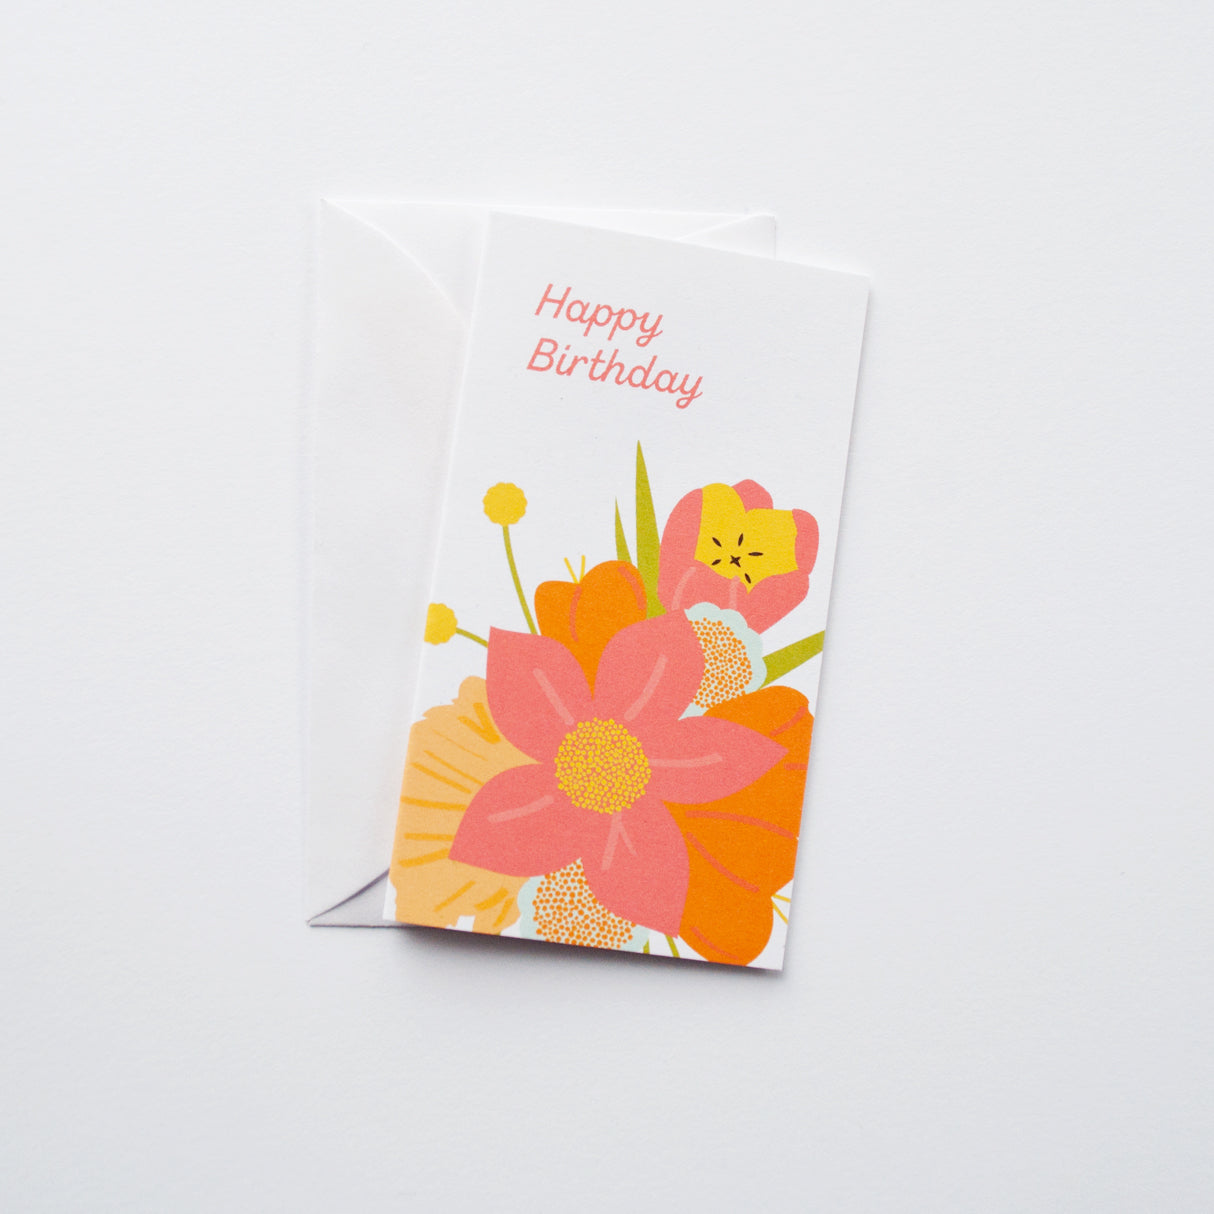 Floral Birthday mini card